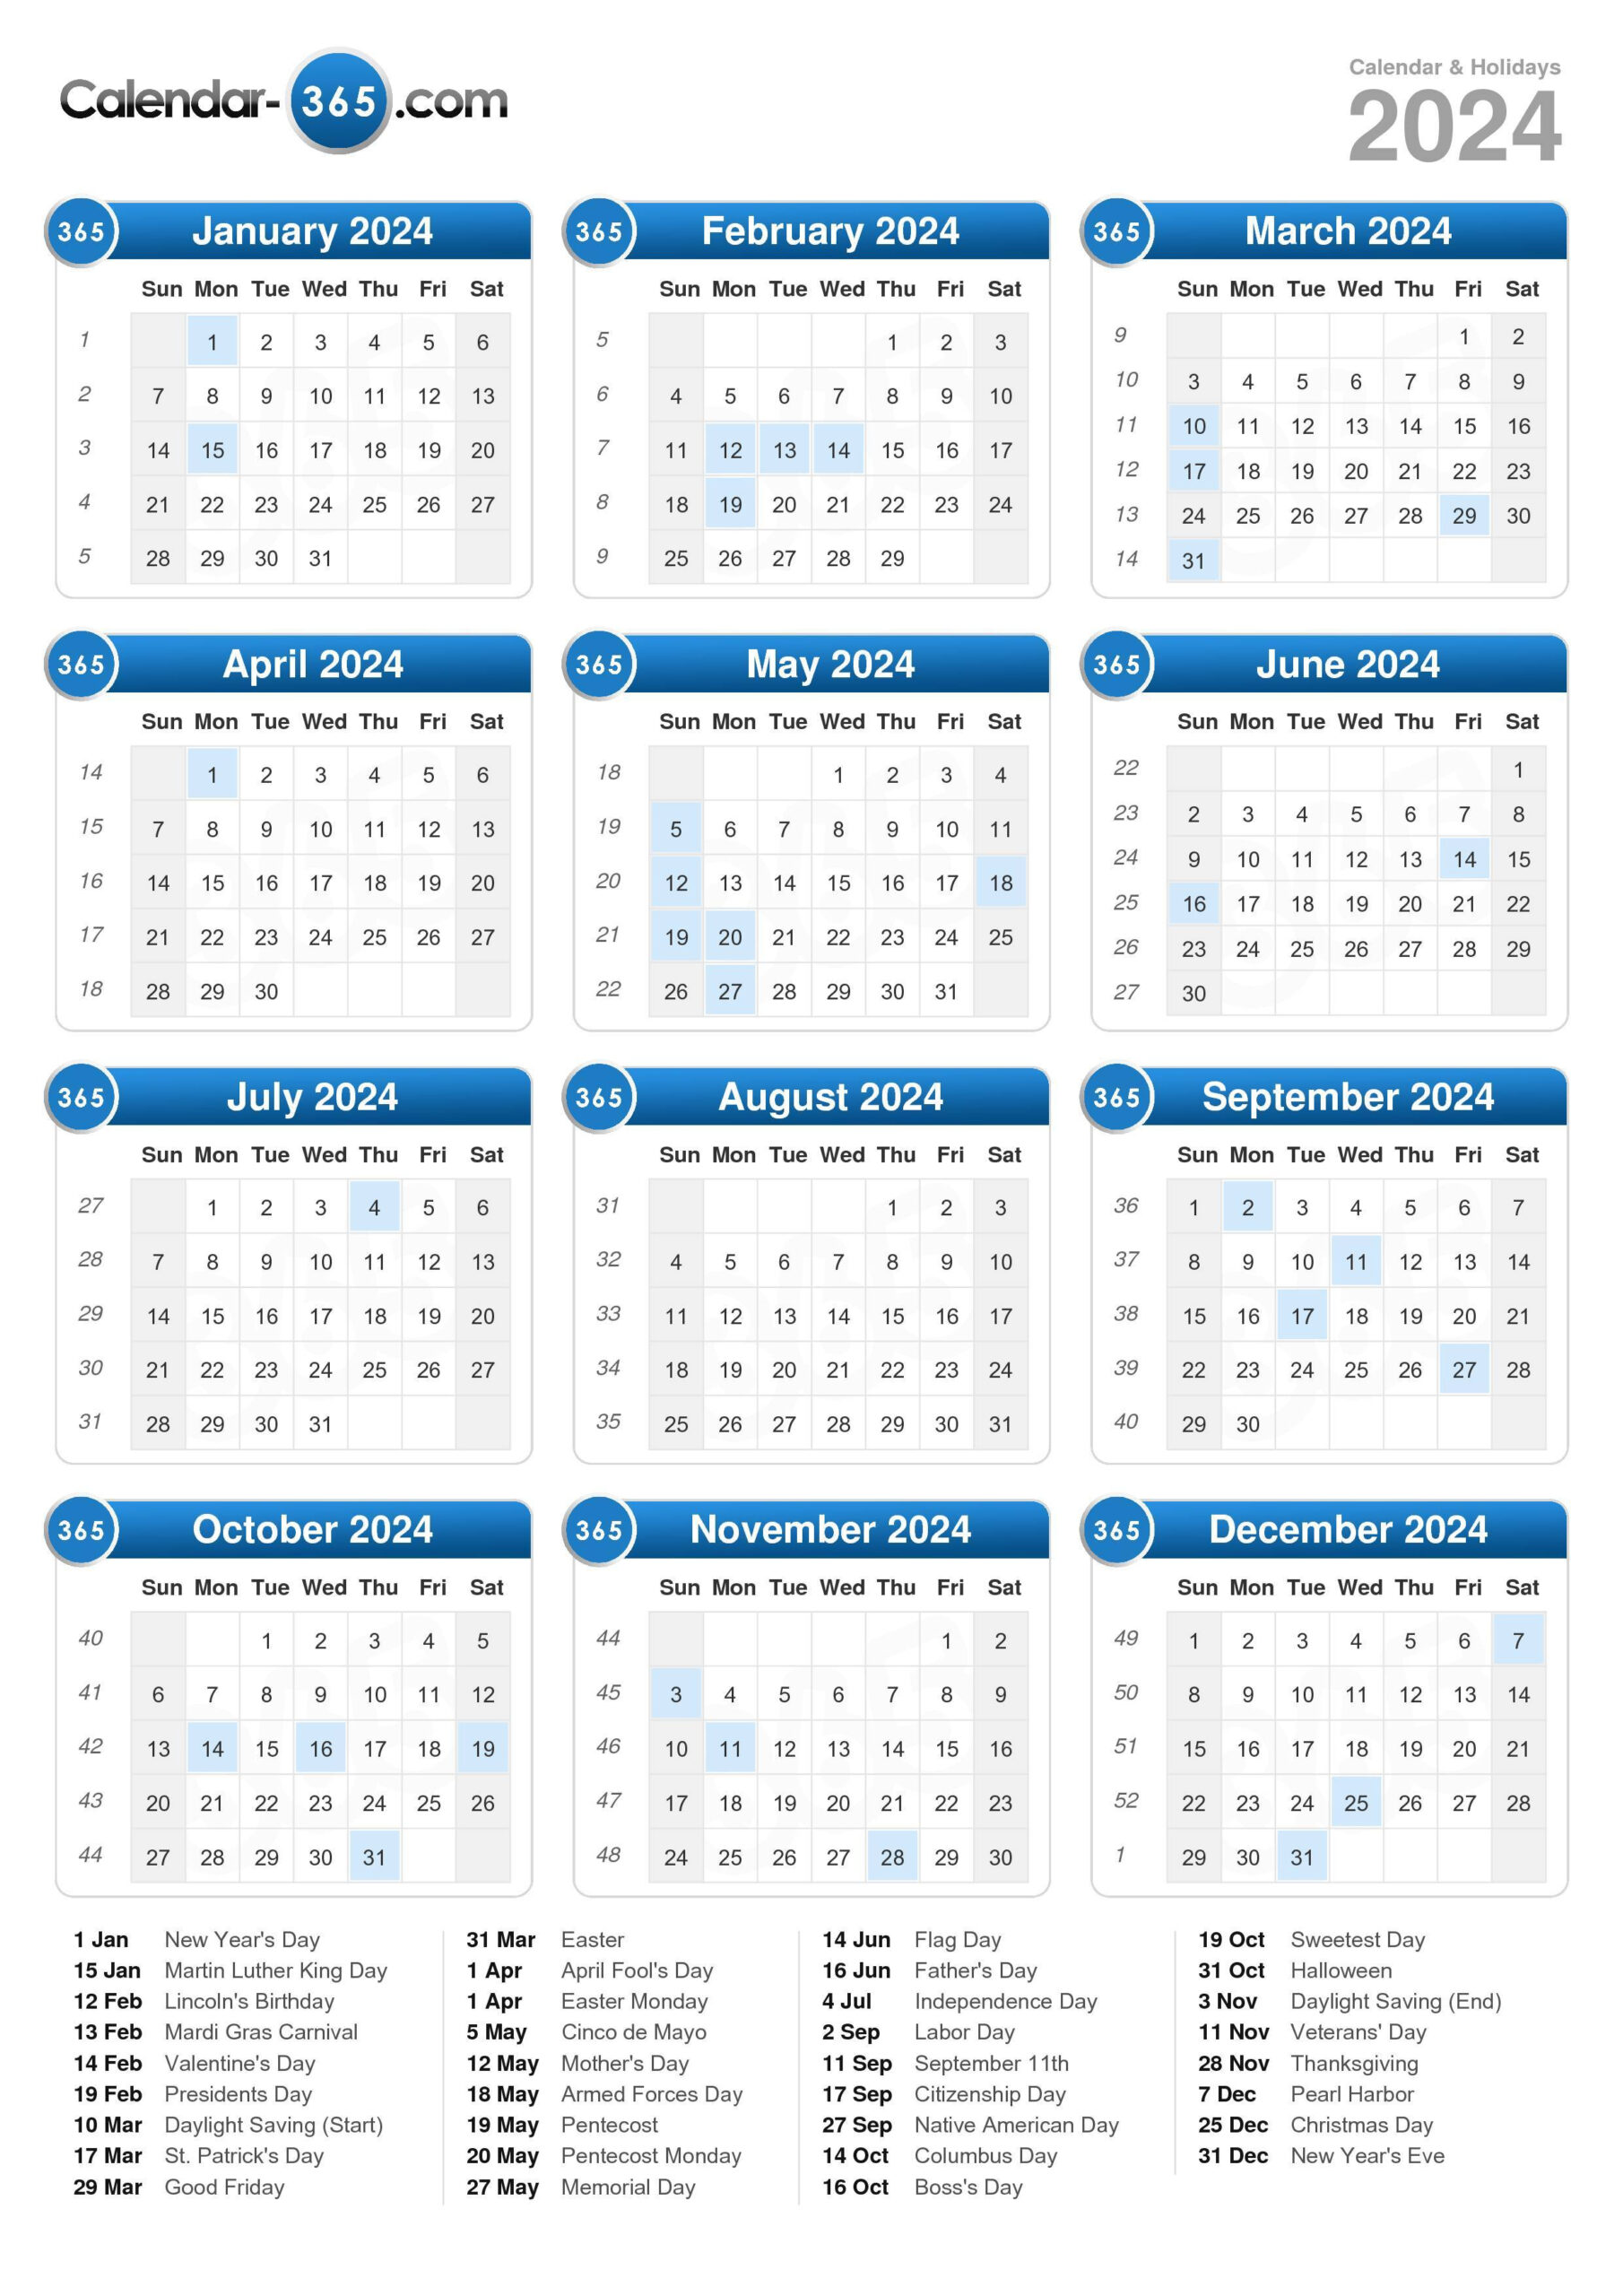 2024 Calendar | How Many Days In 2024 Calendar Year?